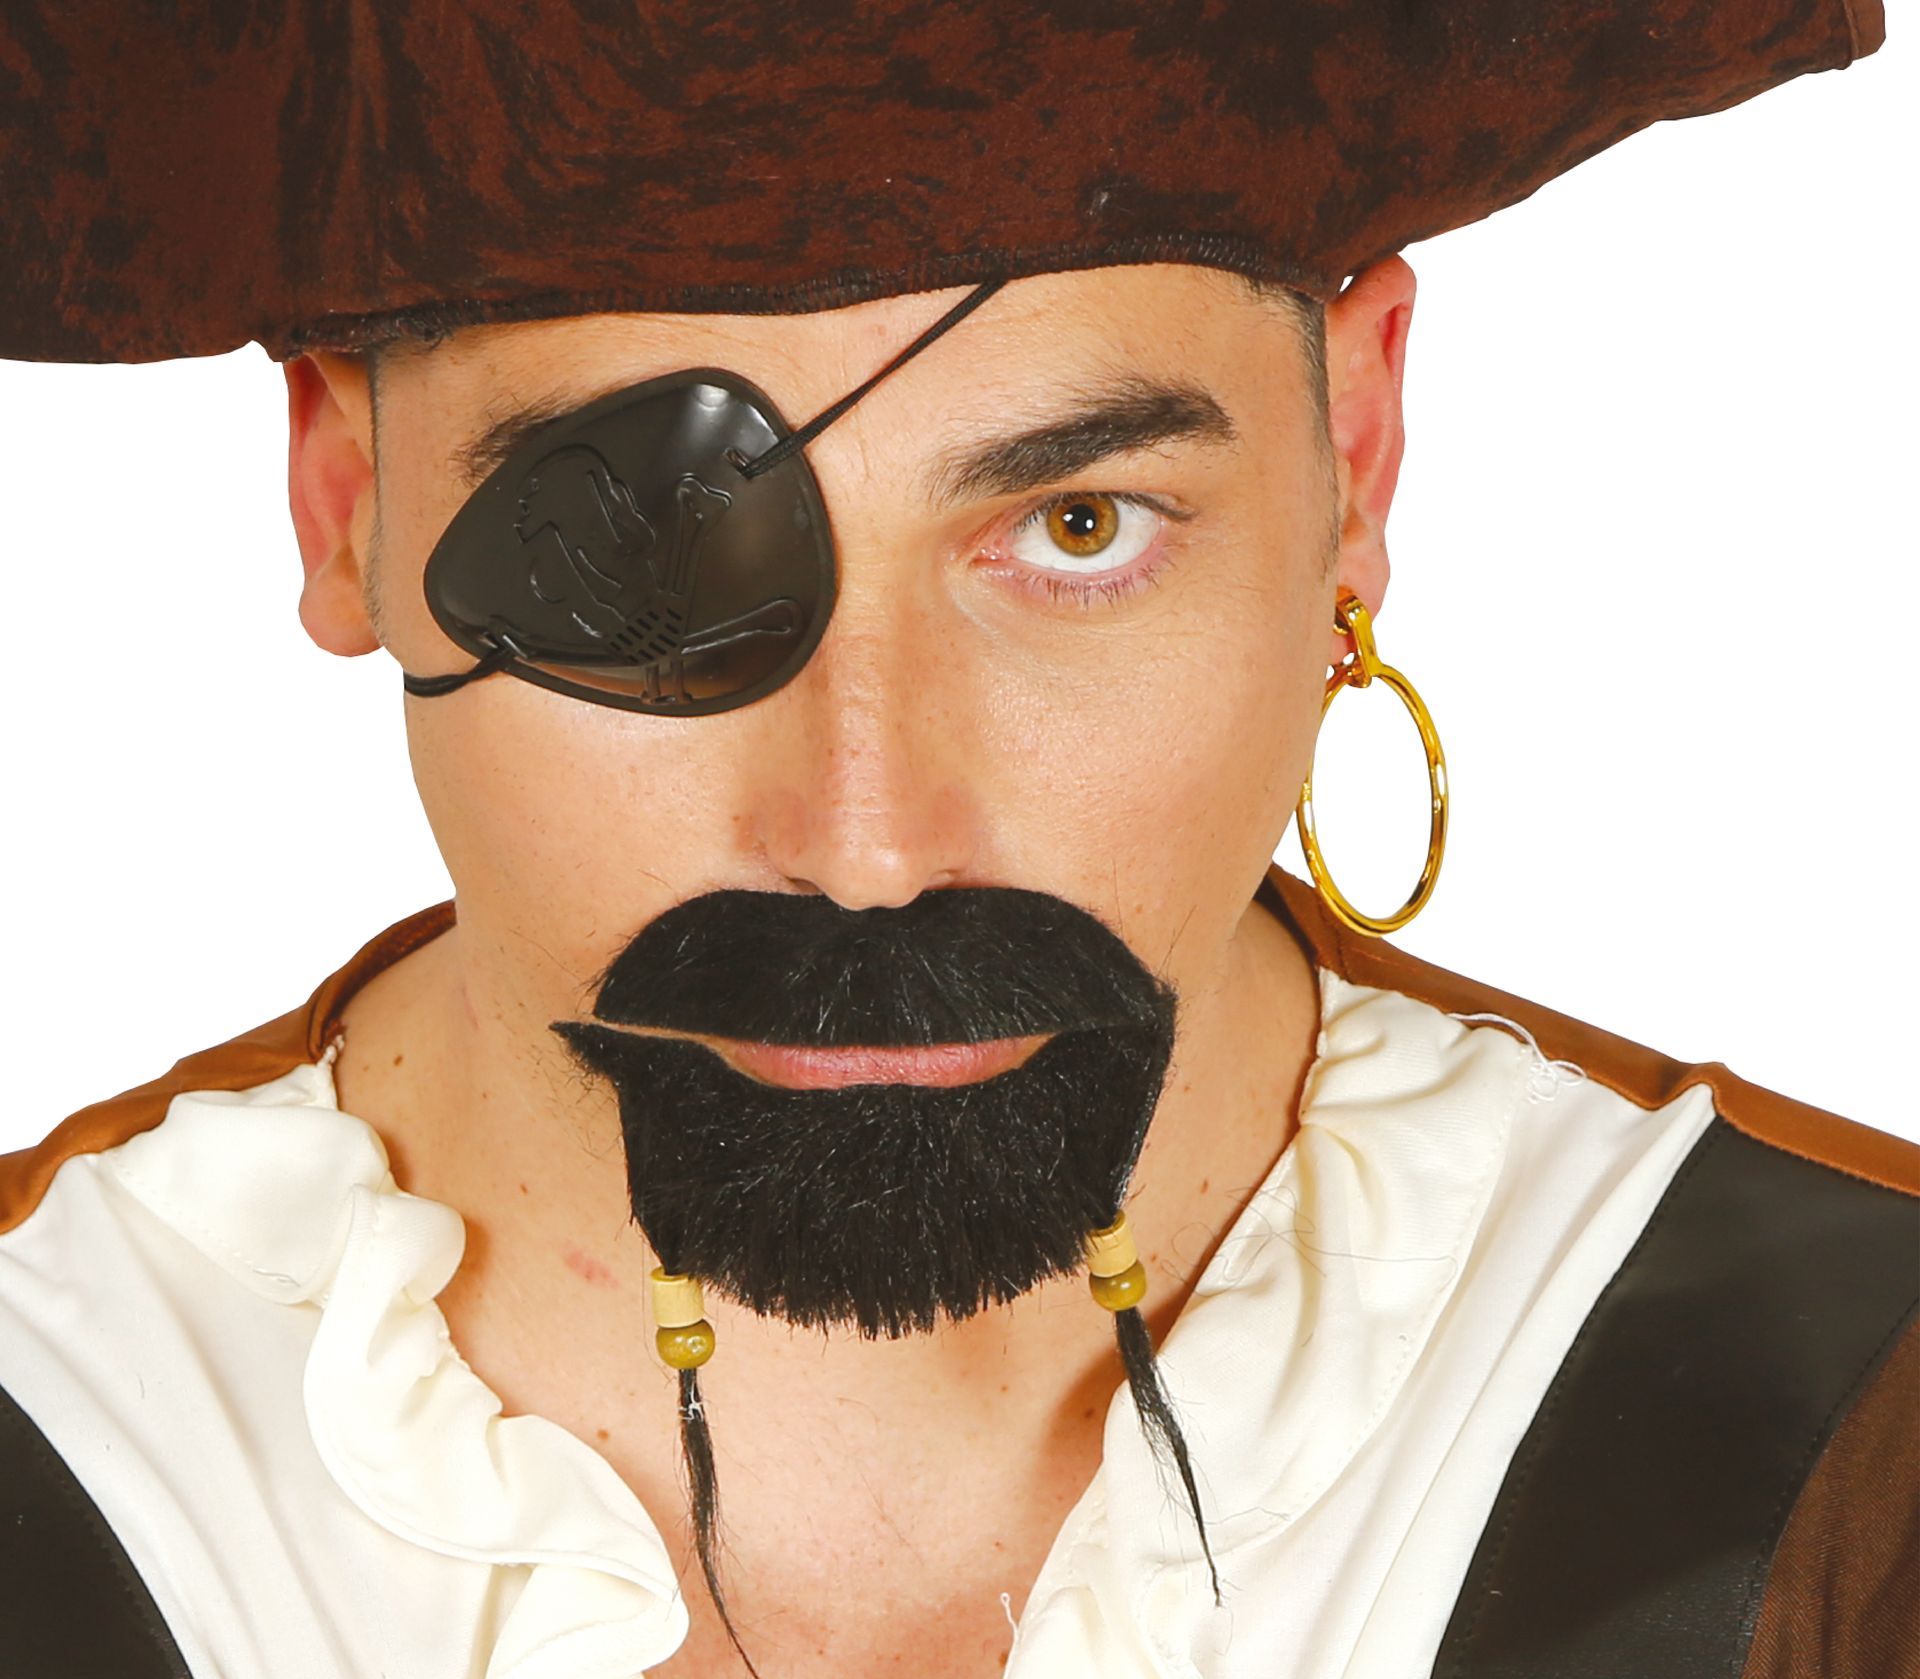 Piraten accessoire setje